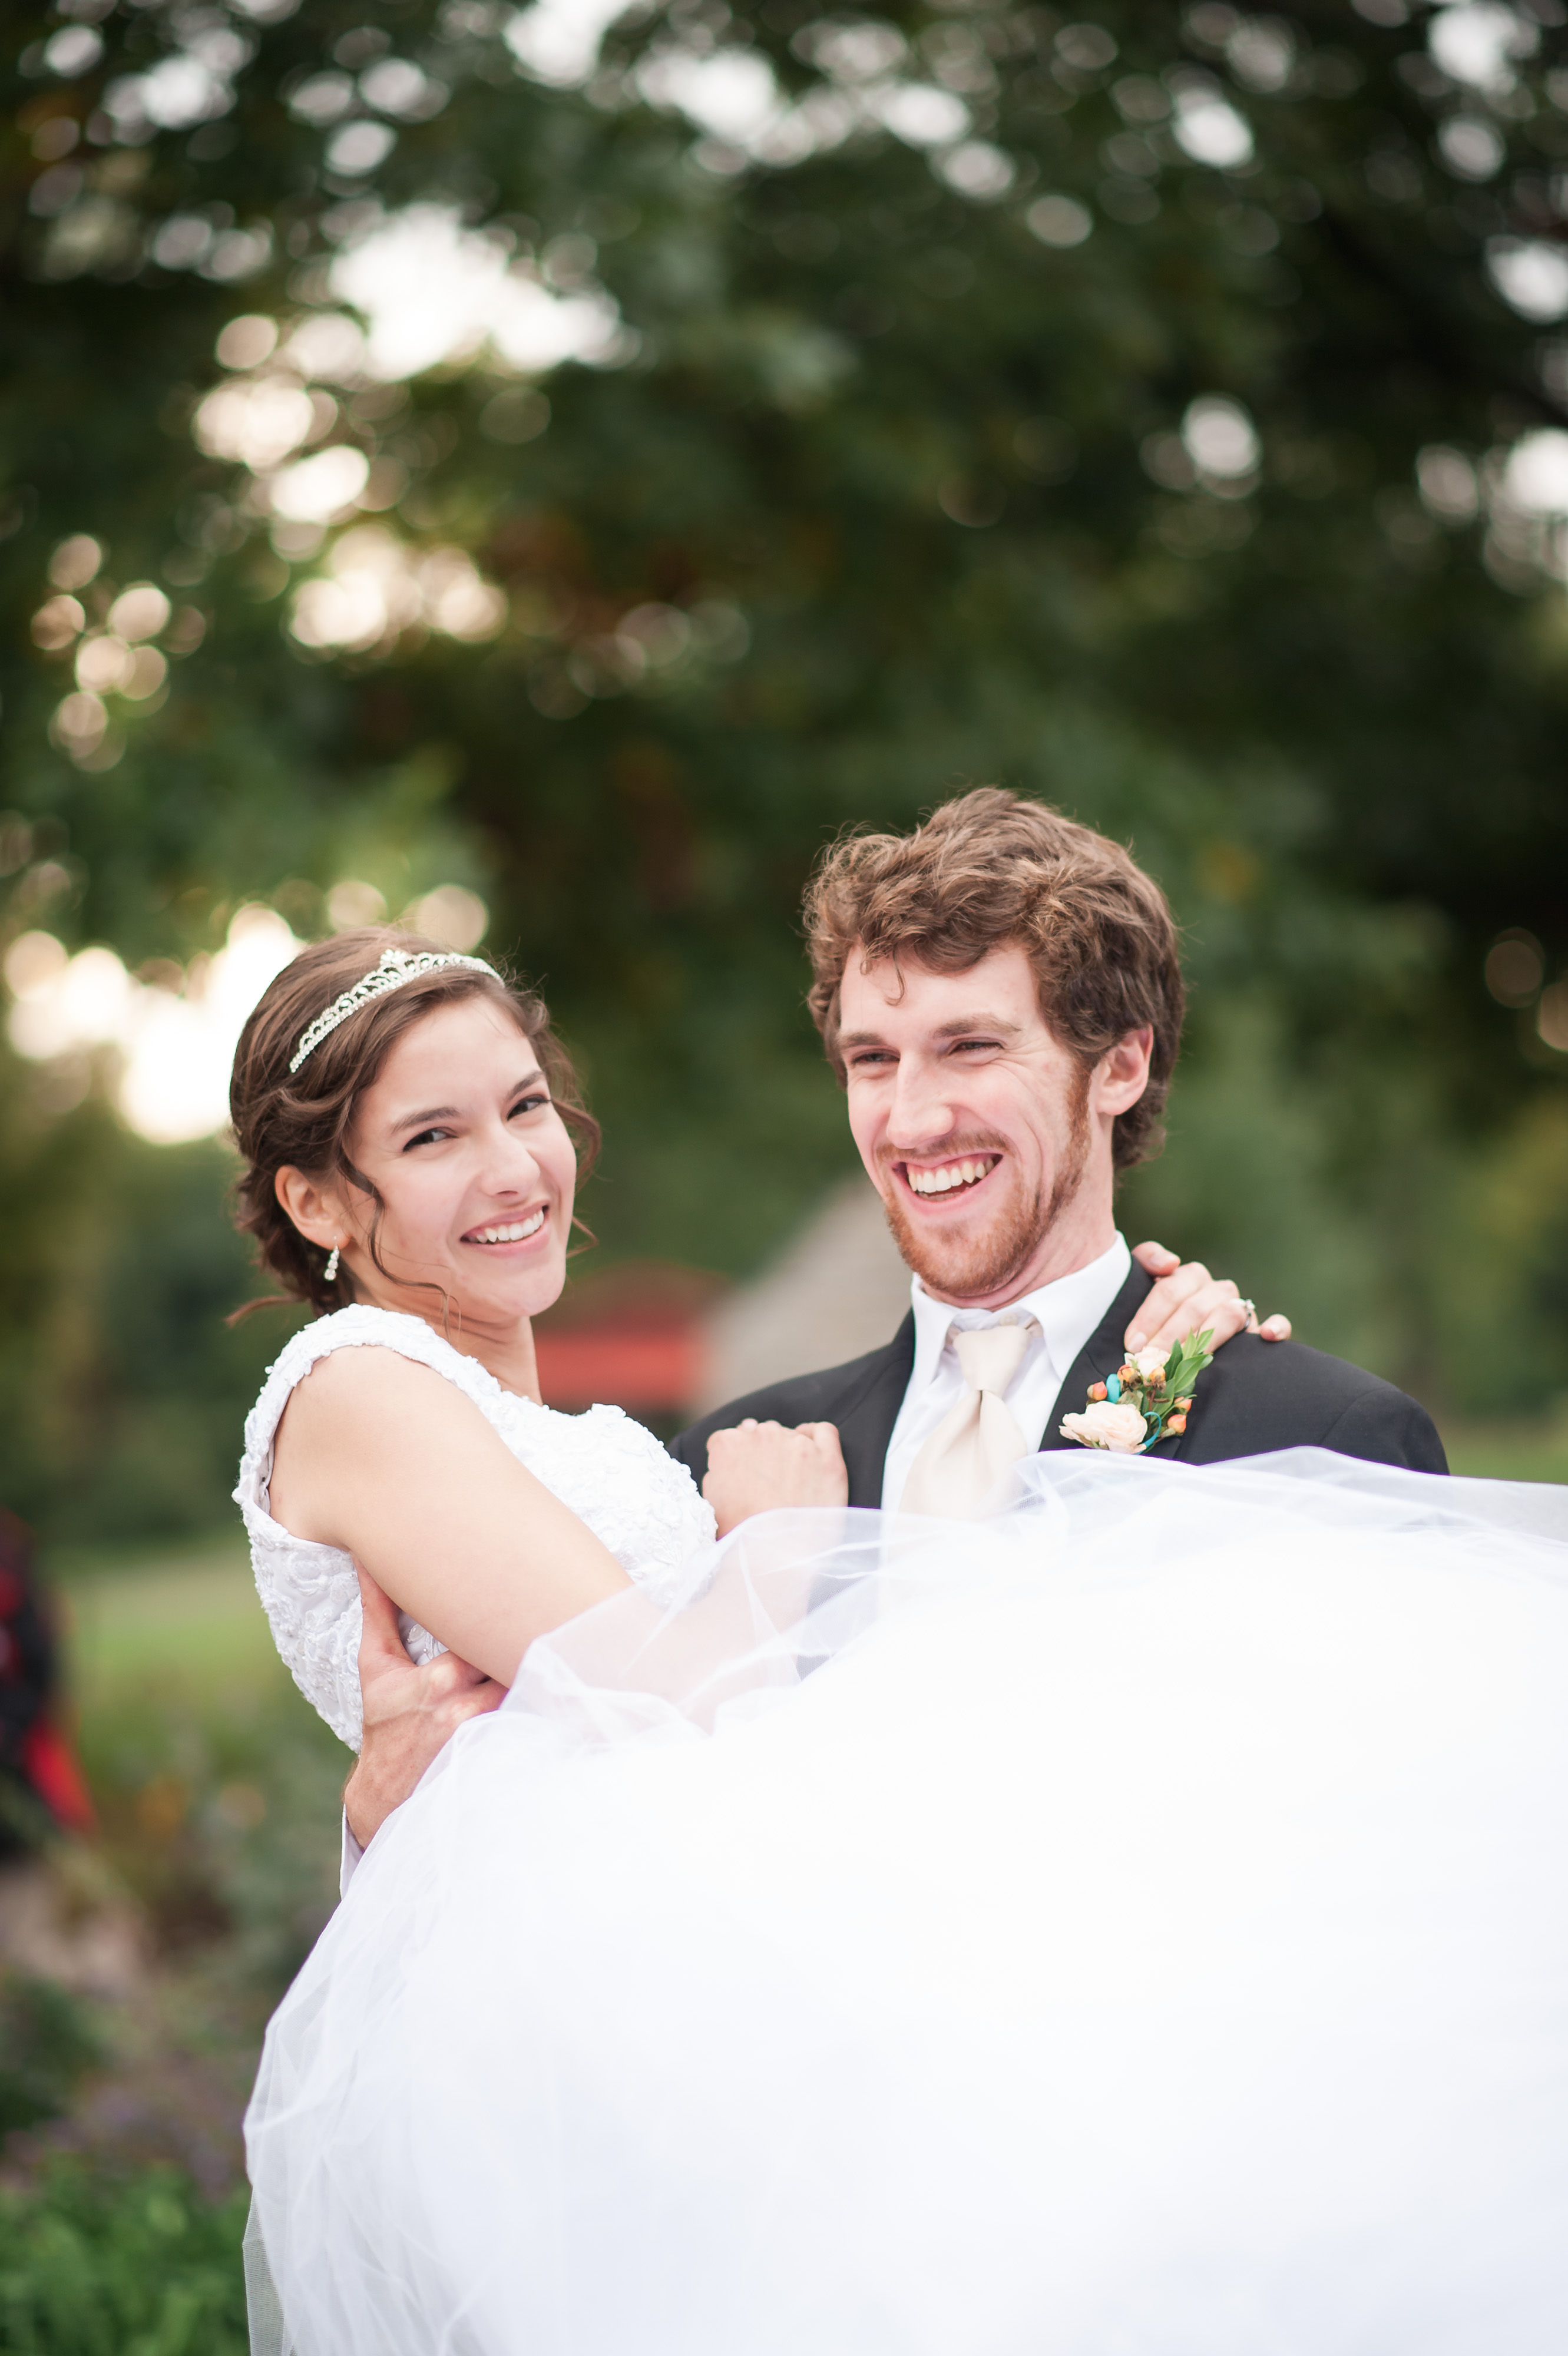 Hannah & Nick | Married | 10.11.2014